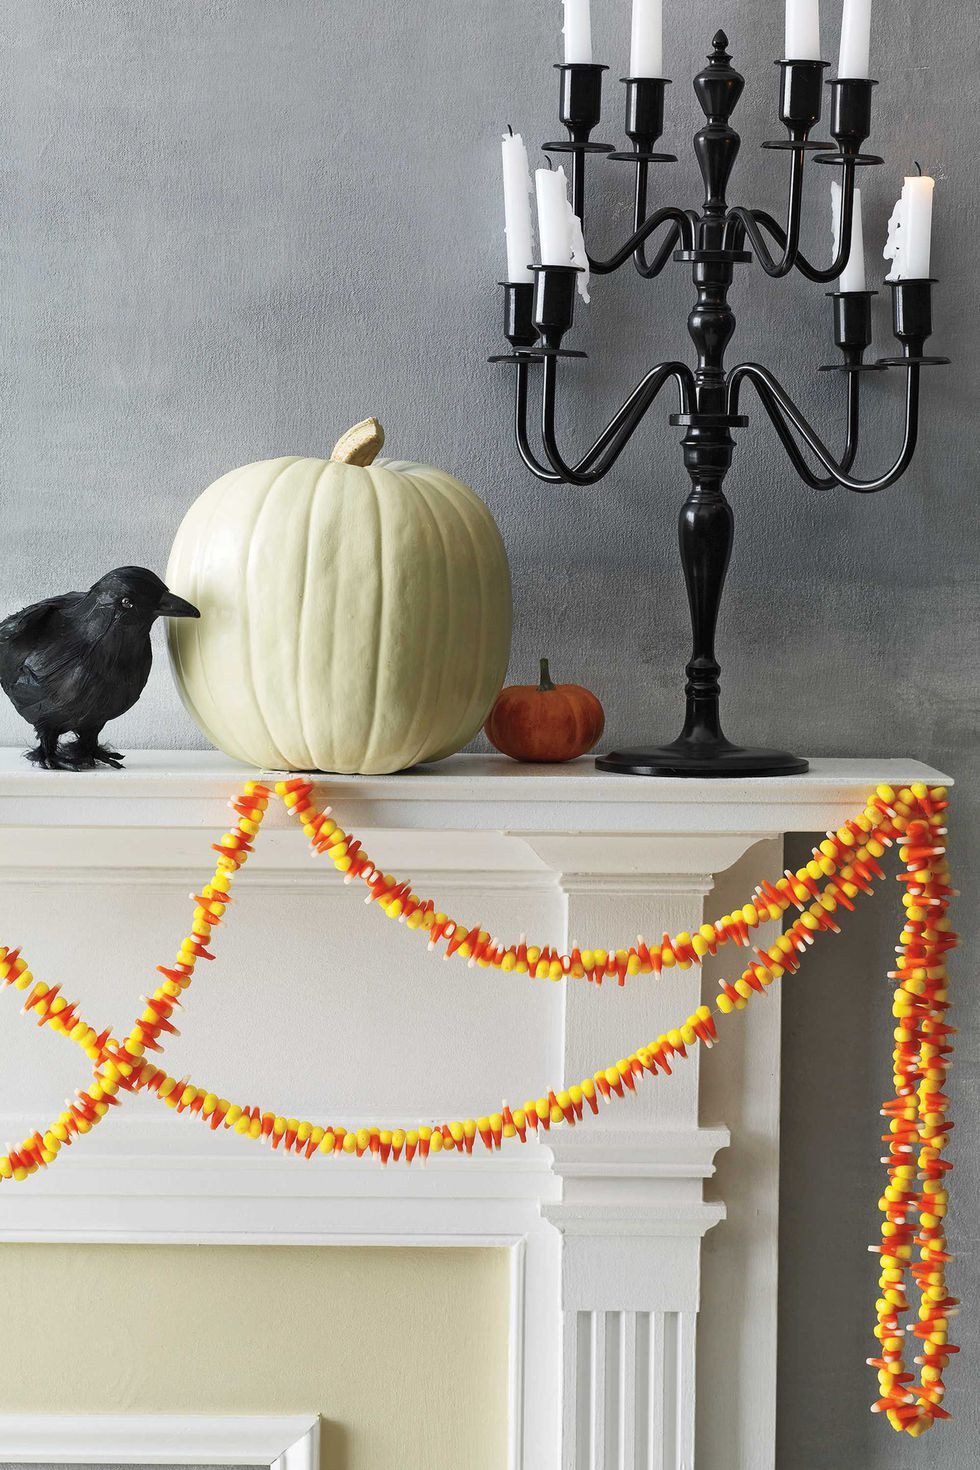 DIY Halloween Decorations Ideas
 15 Adorable DIY Halloween Decor Ideas To Add To Your